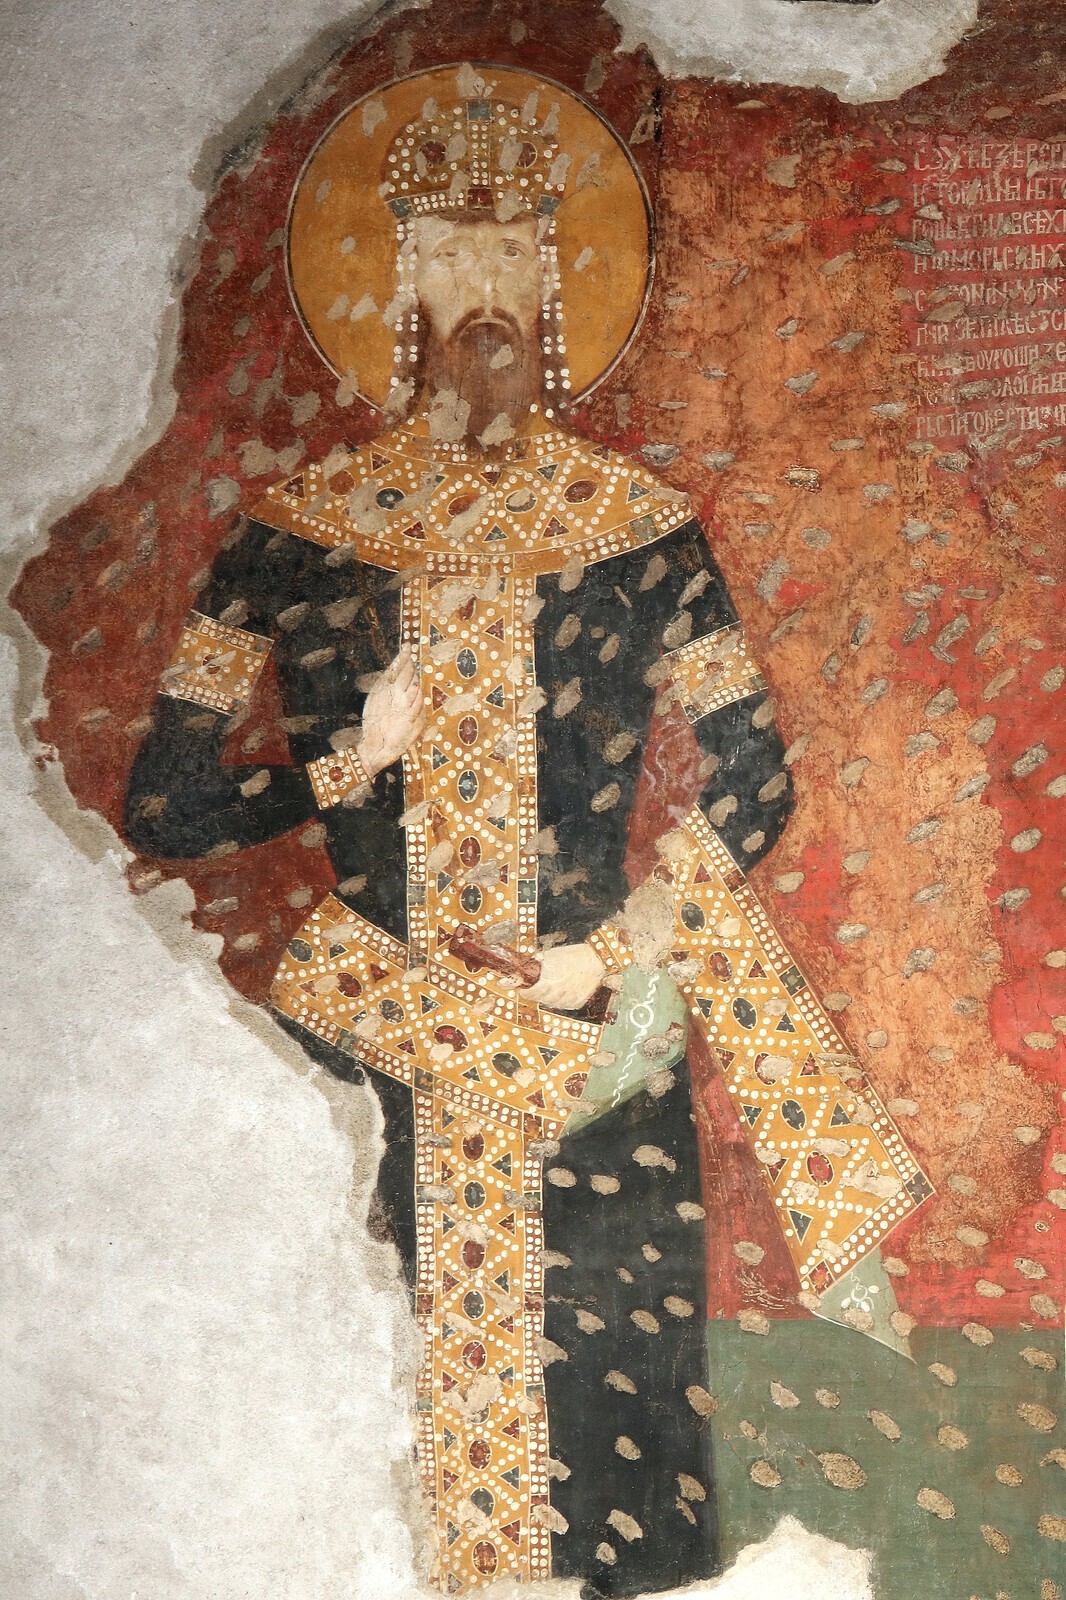 King Milutin, the kteetor (founder) of the church